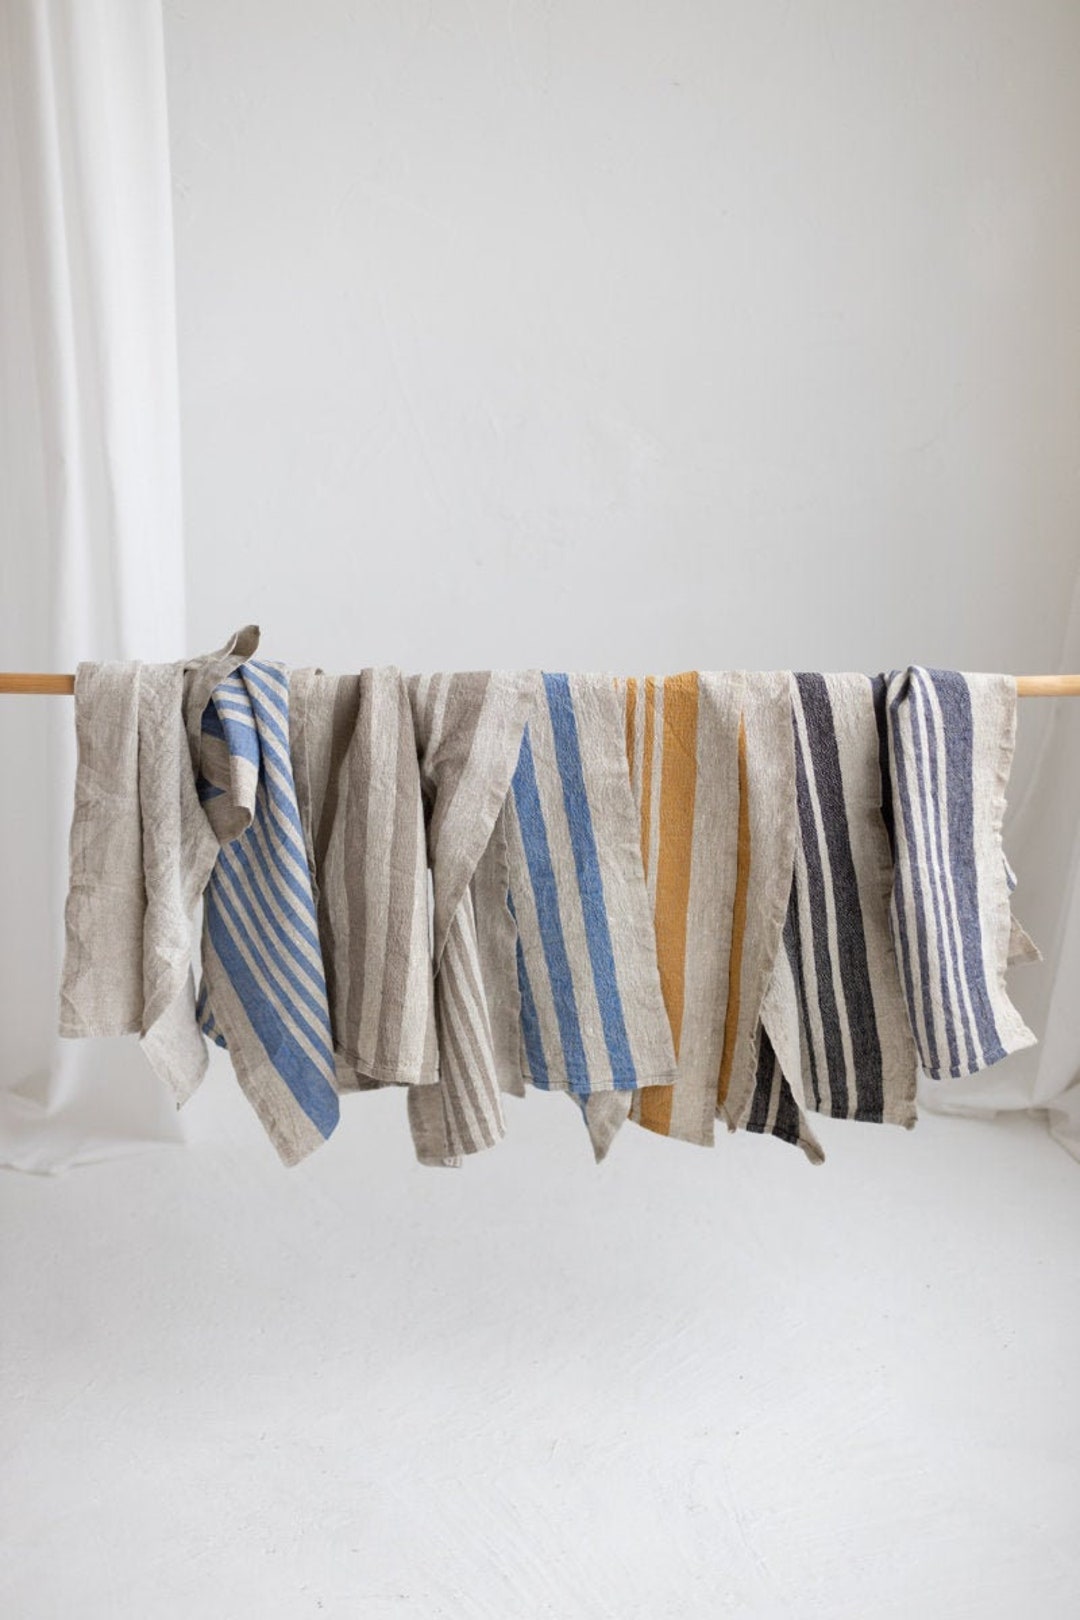 Restaurant Towels - Economy Linen and Towel Service